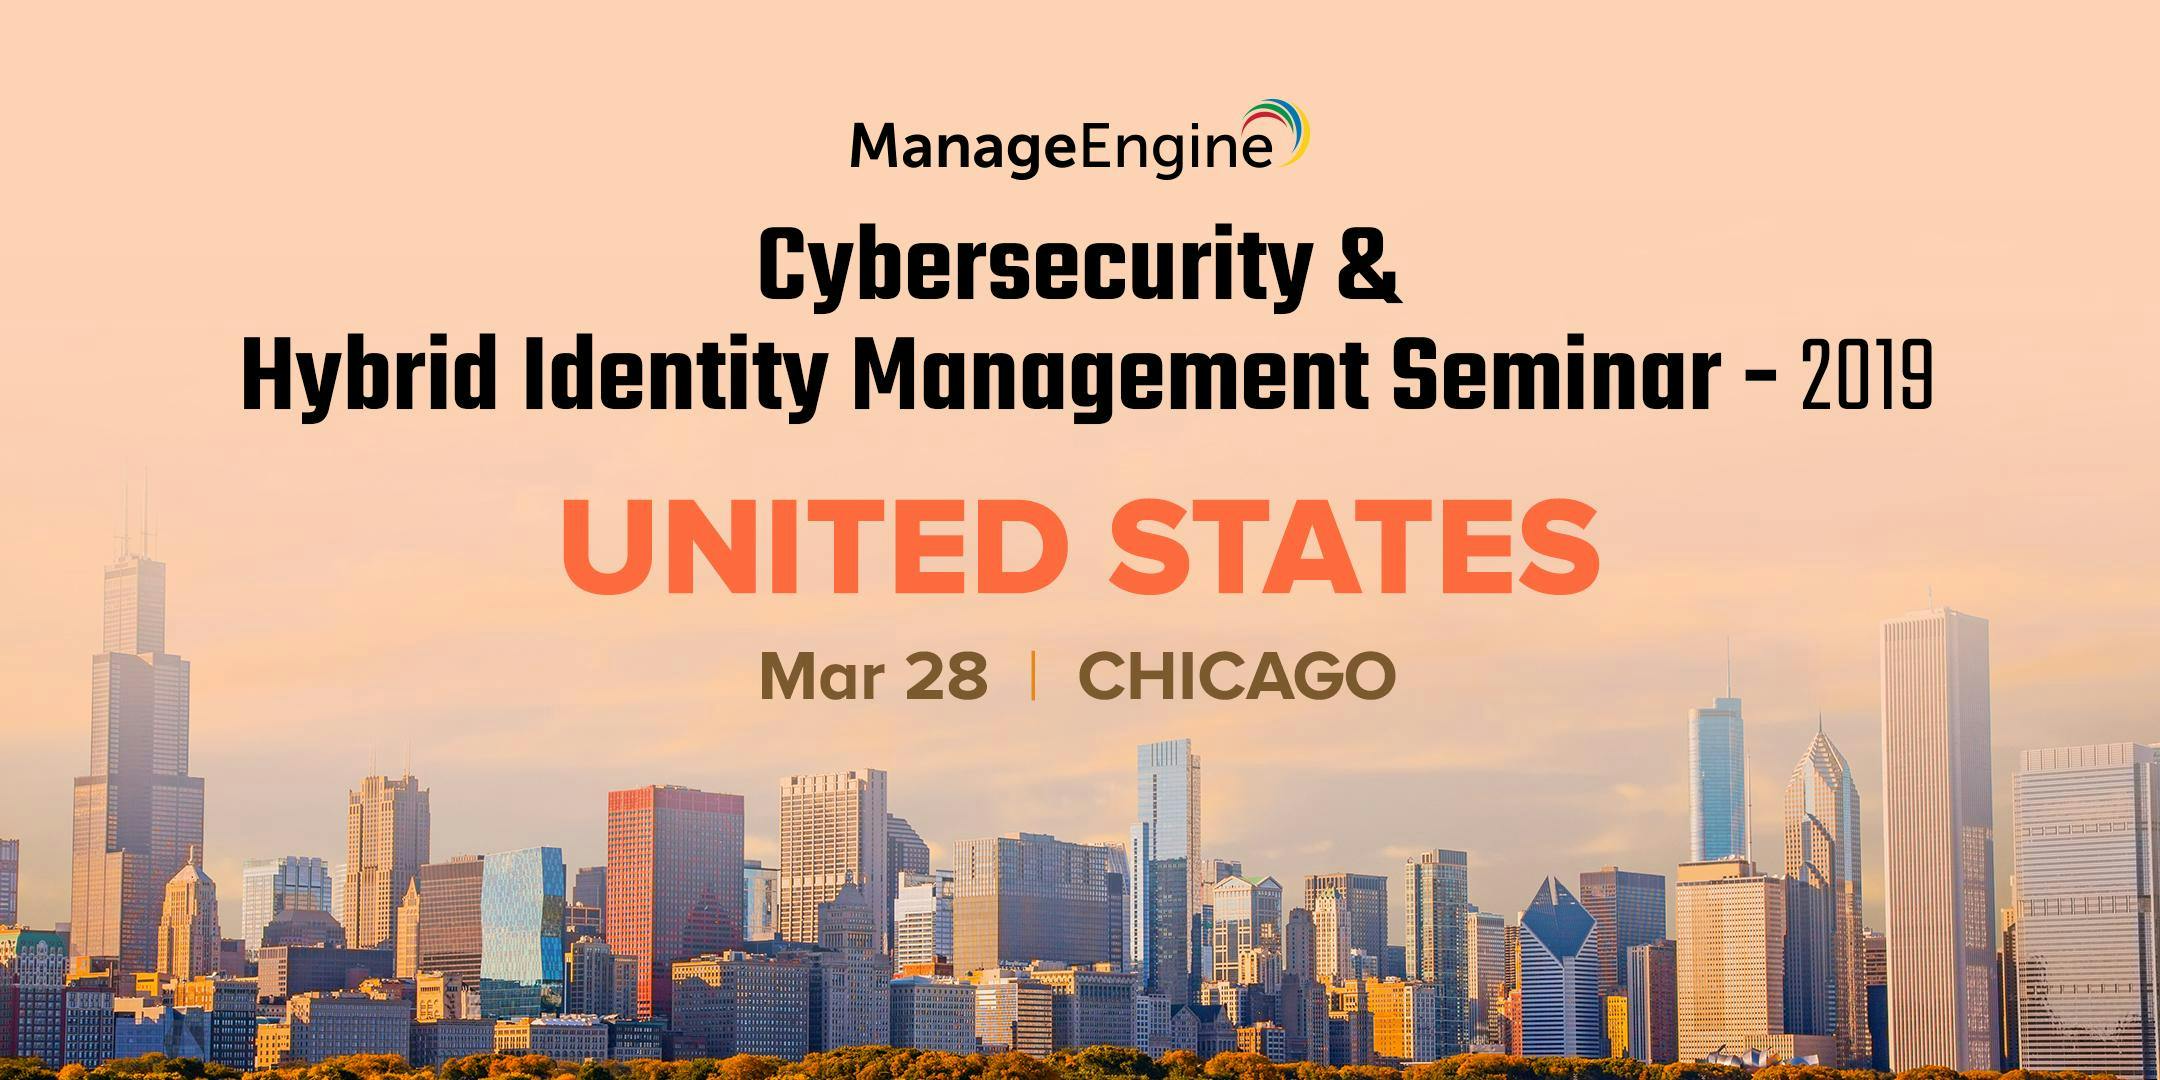 ManageEngine's Cybersecurity & Hybrid Identity Management Seminar - Chicago